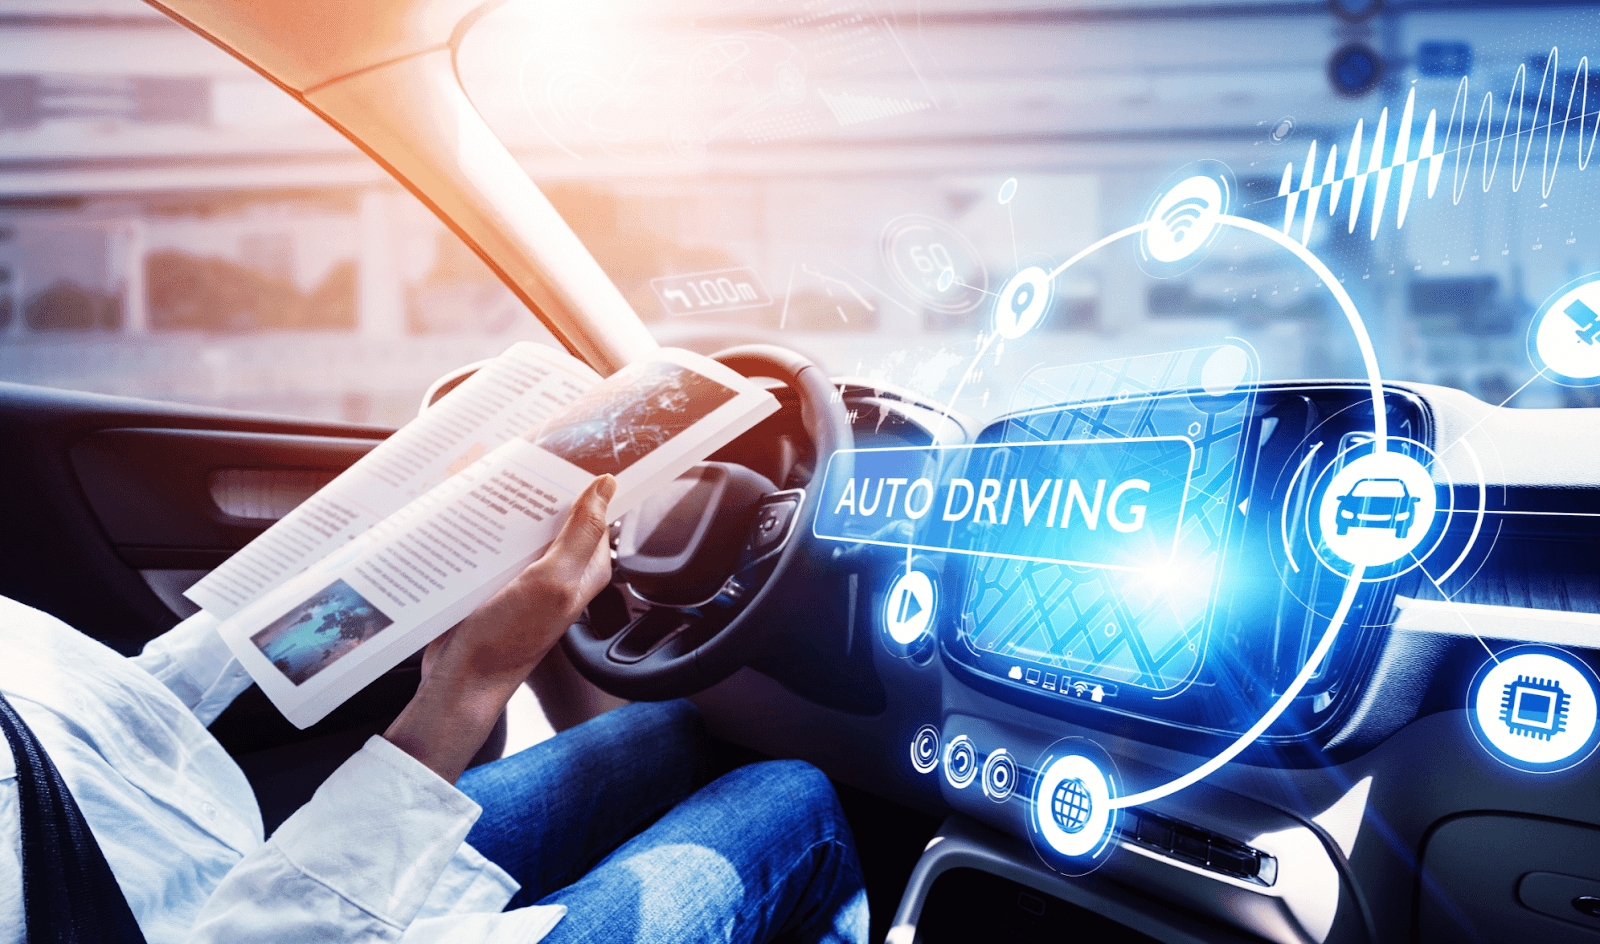 Autonomous Vehicles - artificial intelligence in transportation